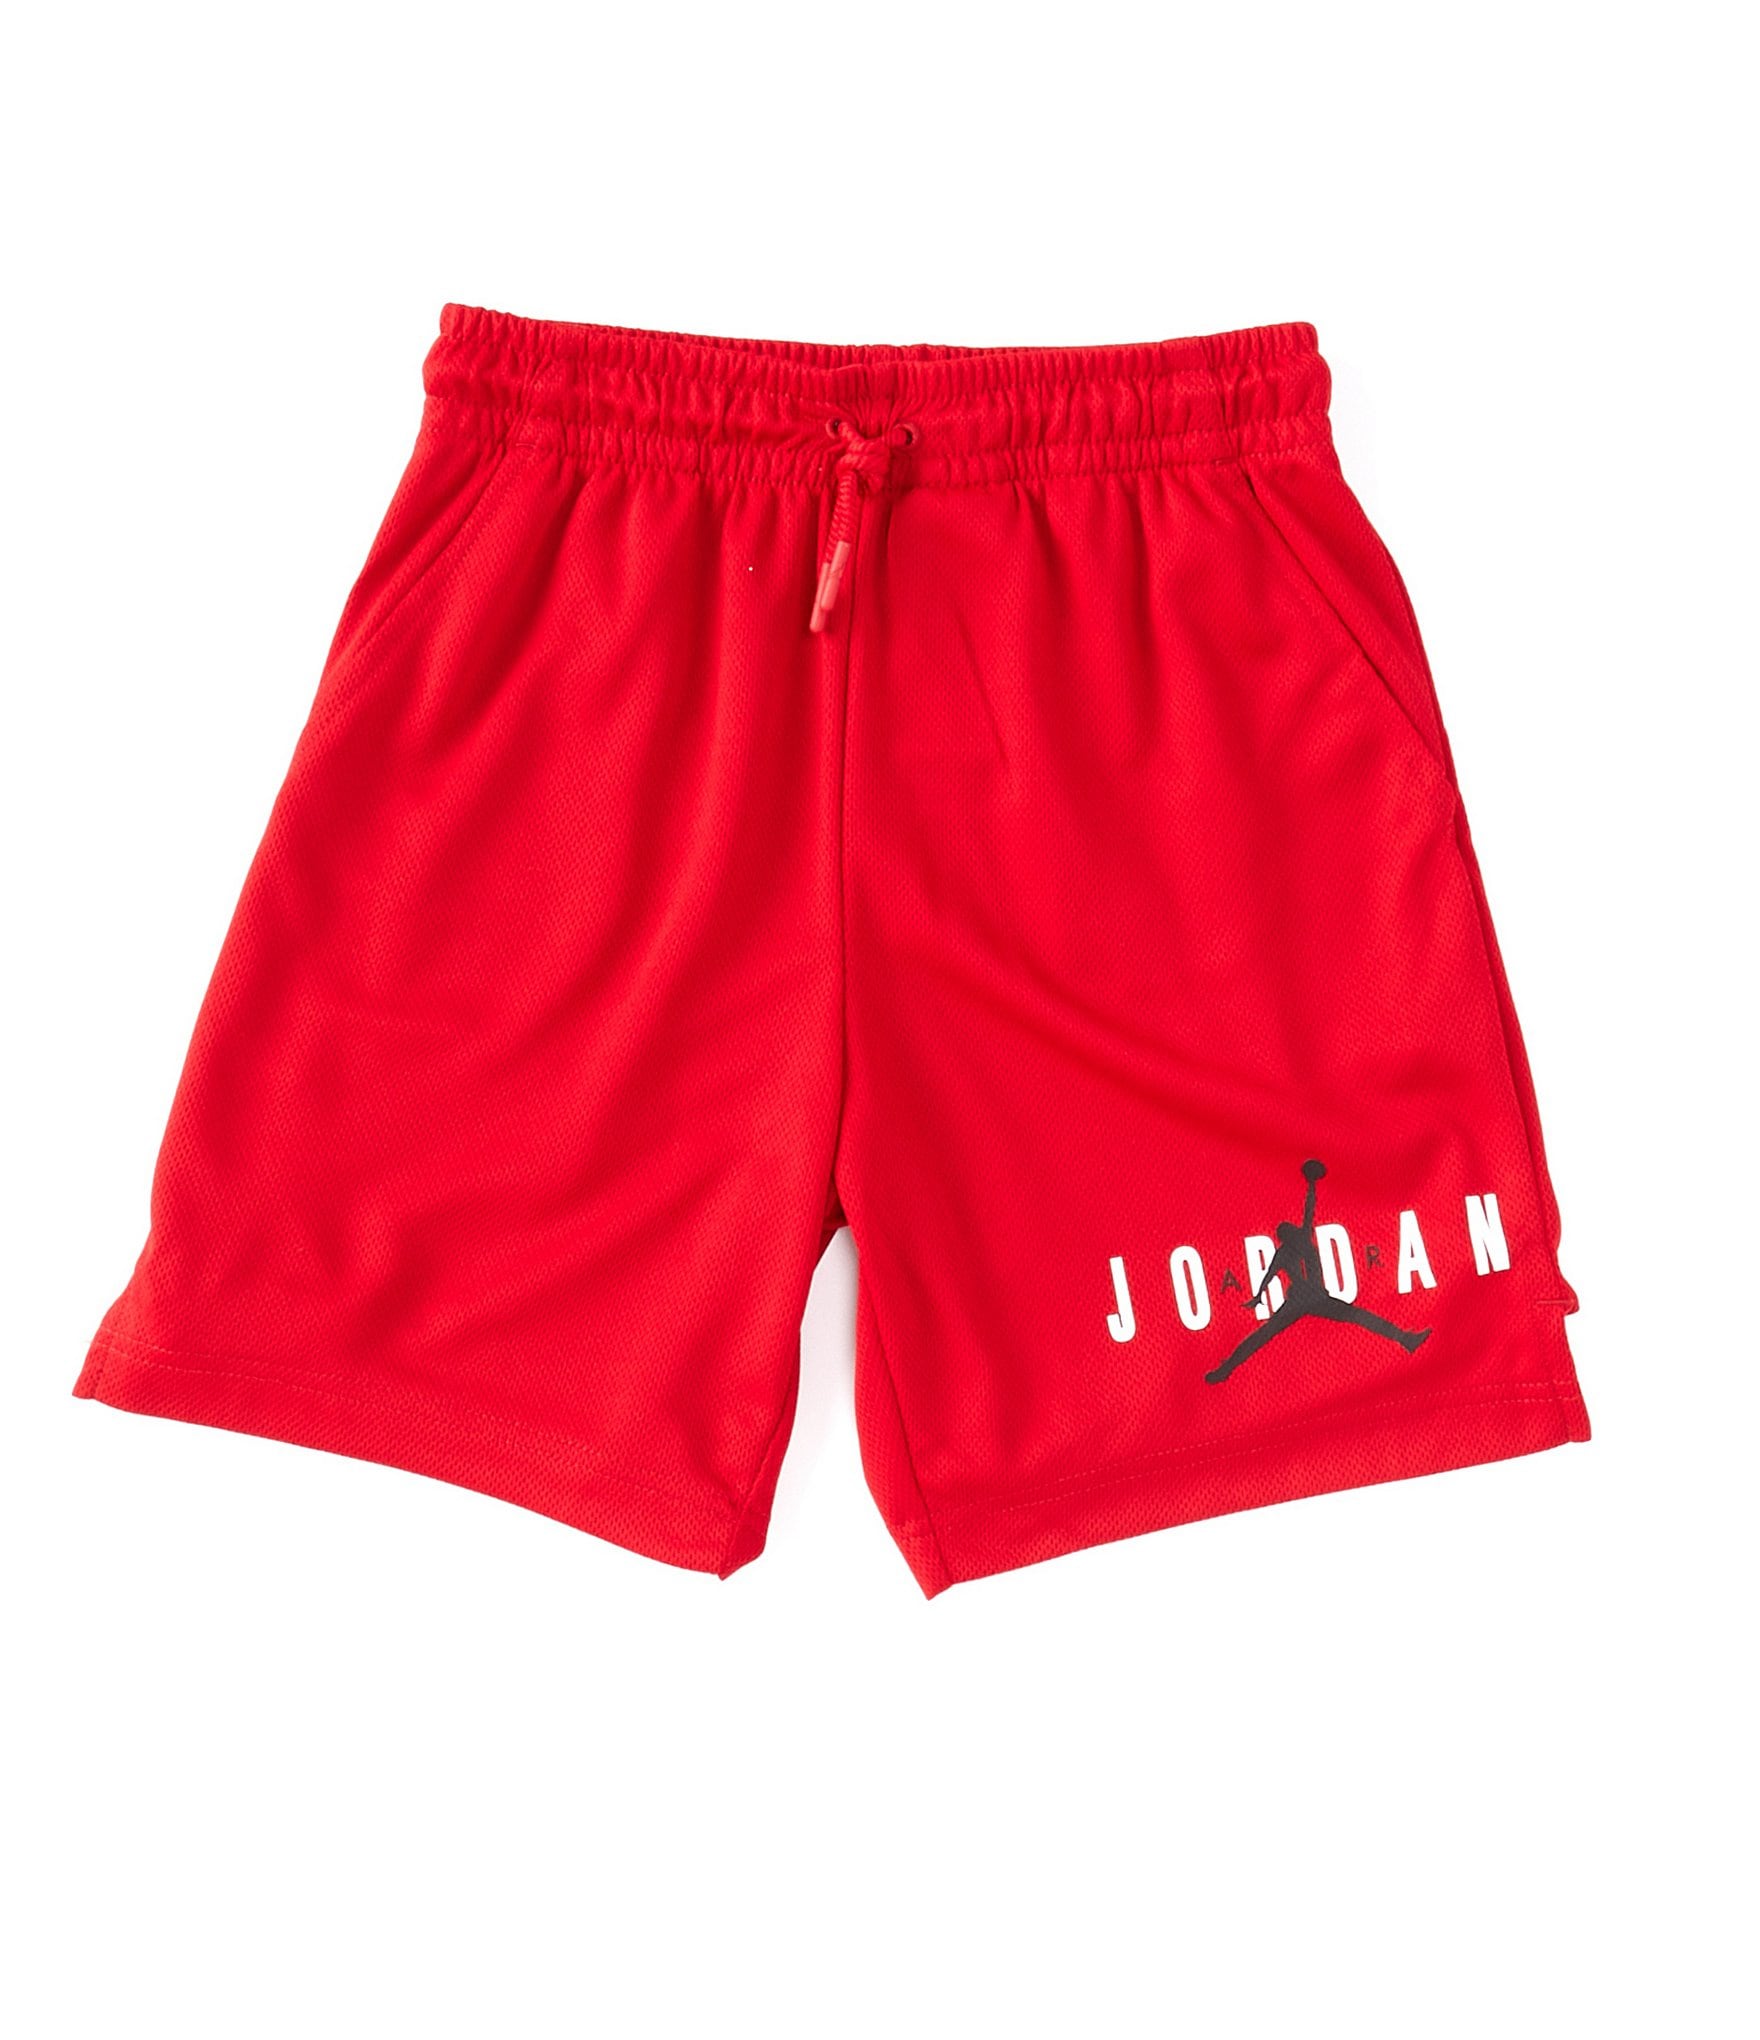 Boys Jordan Shorts.